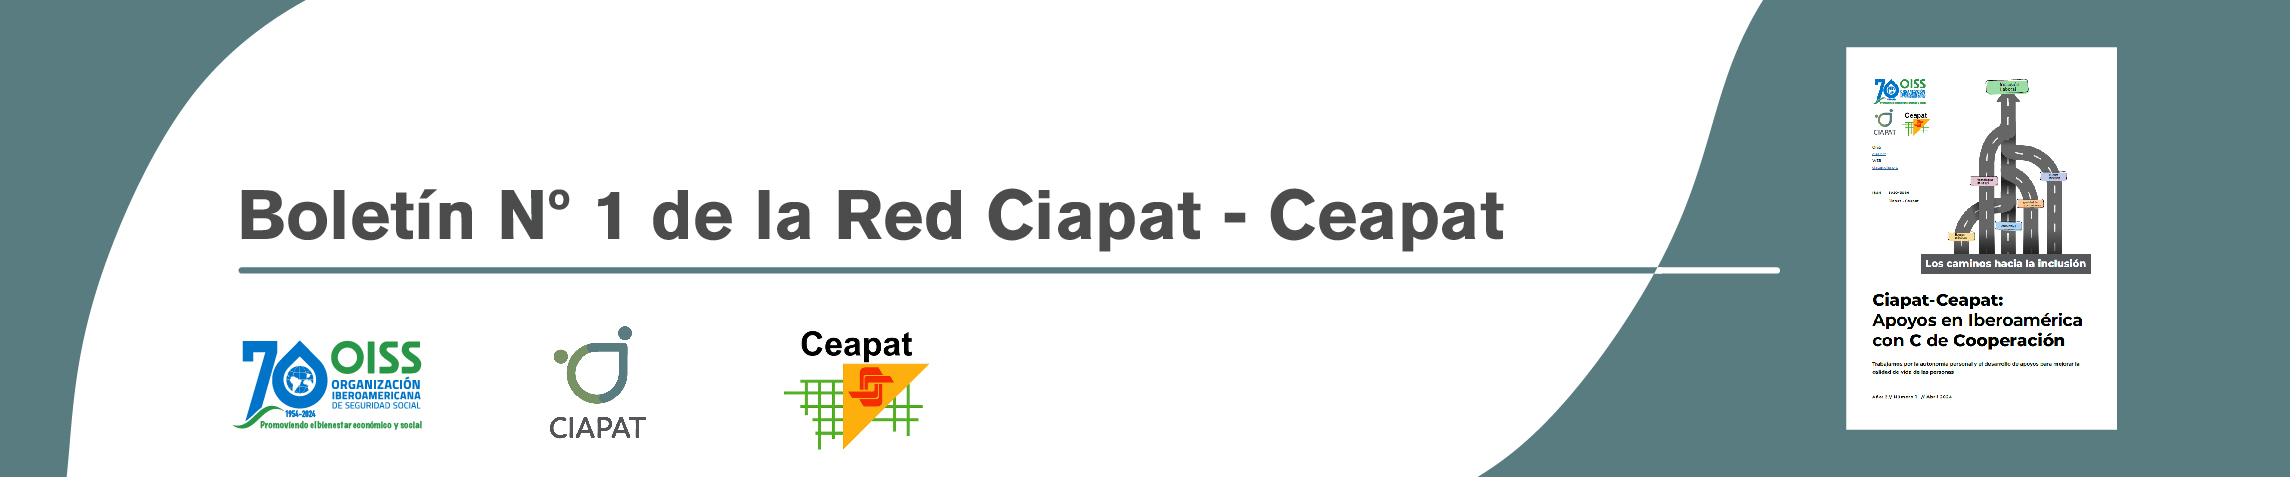 Se muestra la portada de l Número 1 del boletín de la Red Ciapat-Ceapat y los logos de OISS, Ciapat y Ceapat.